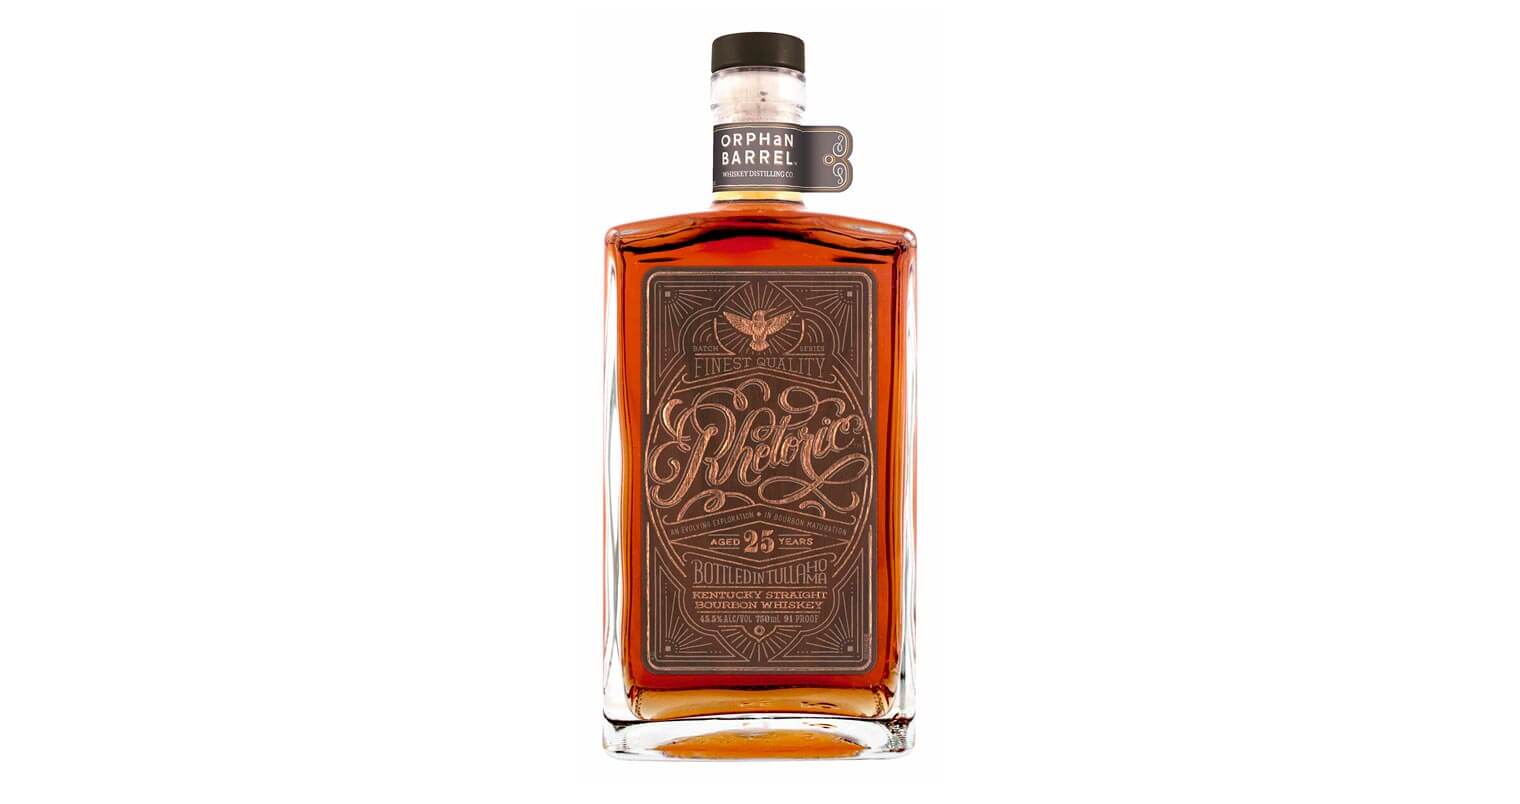 Rhetoric 25 Year Old Kentucky Straight Bourbon Whiskey, bottle on white, featured image